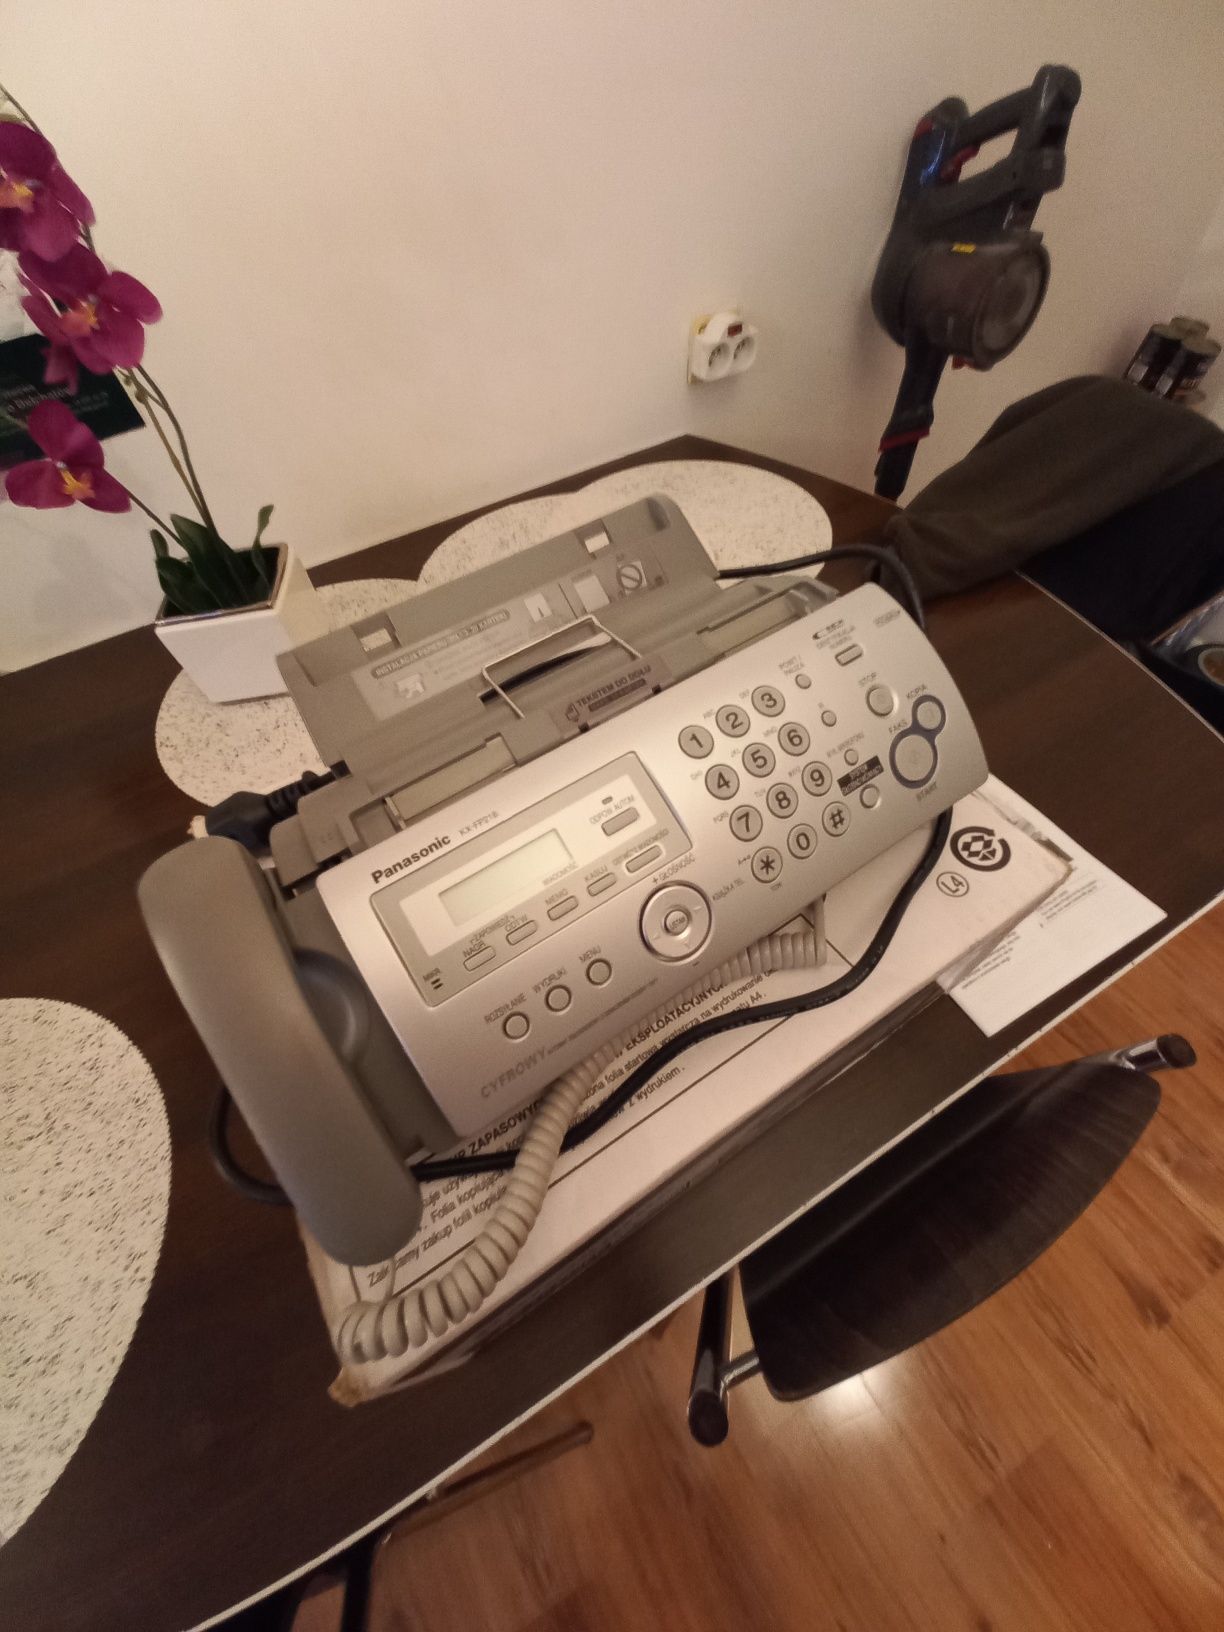 Telefon stacjonarny z faxem Panasonic